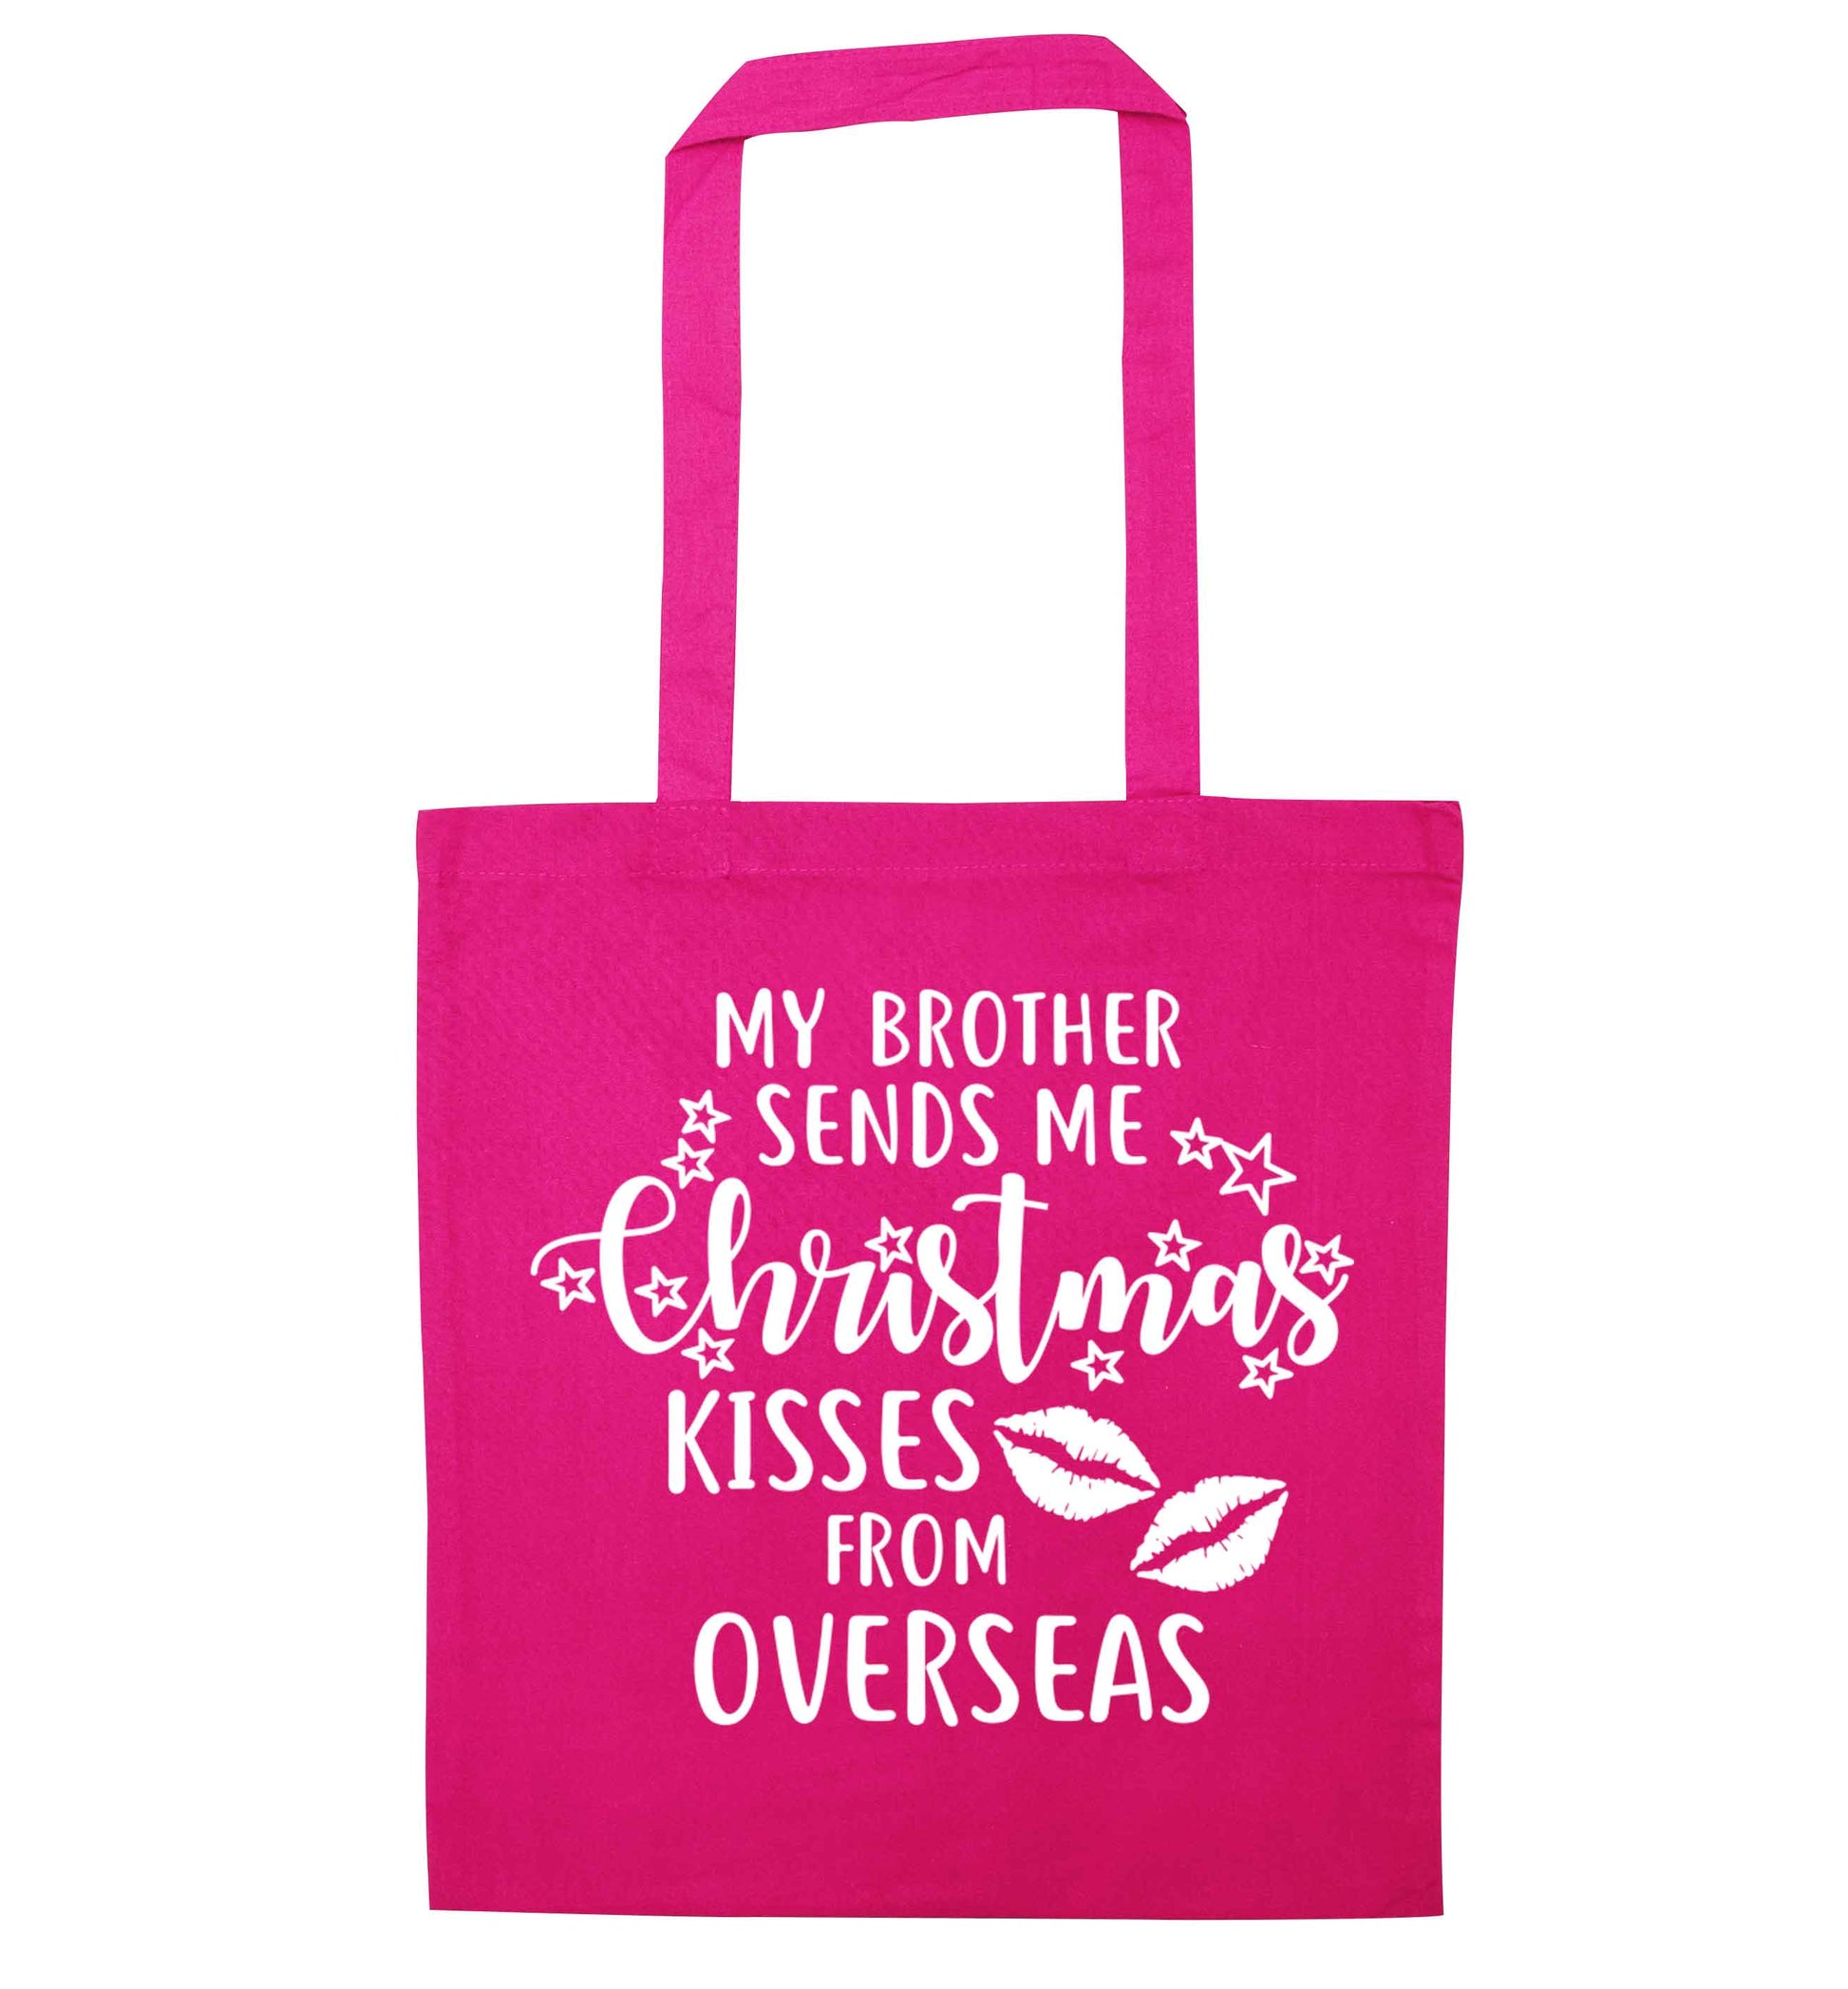 Brother Christmas Kisses Overseas pink tote bag